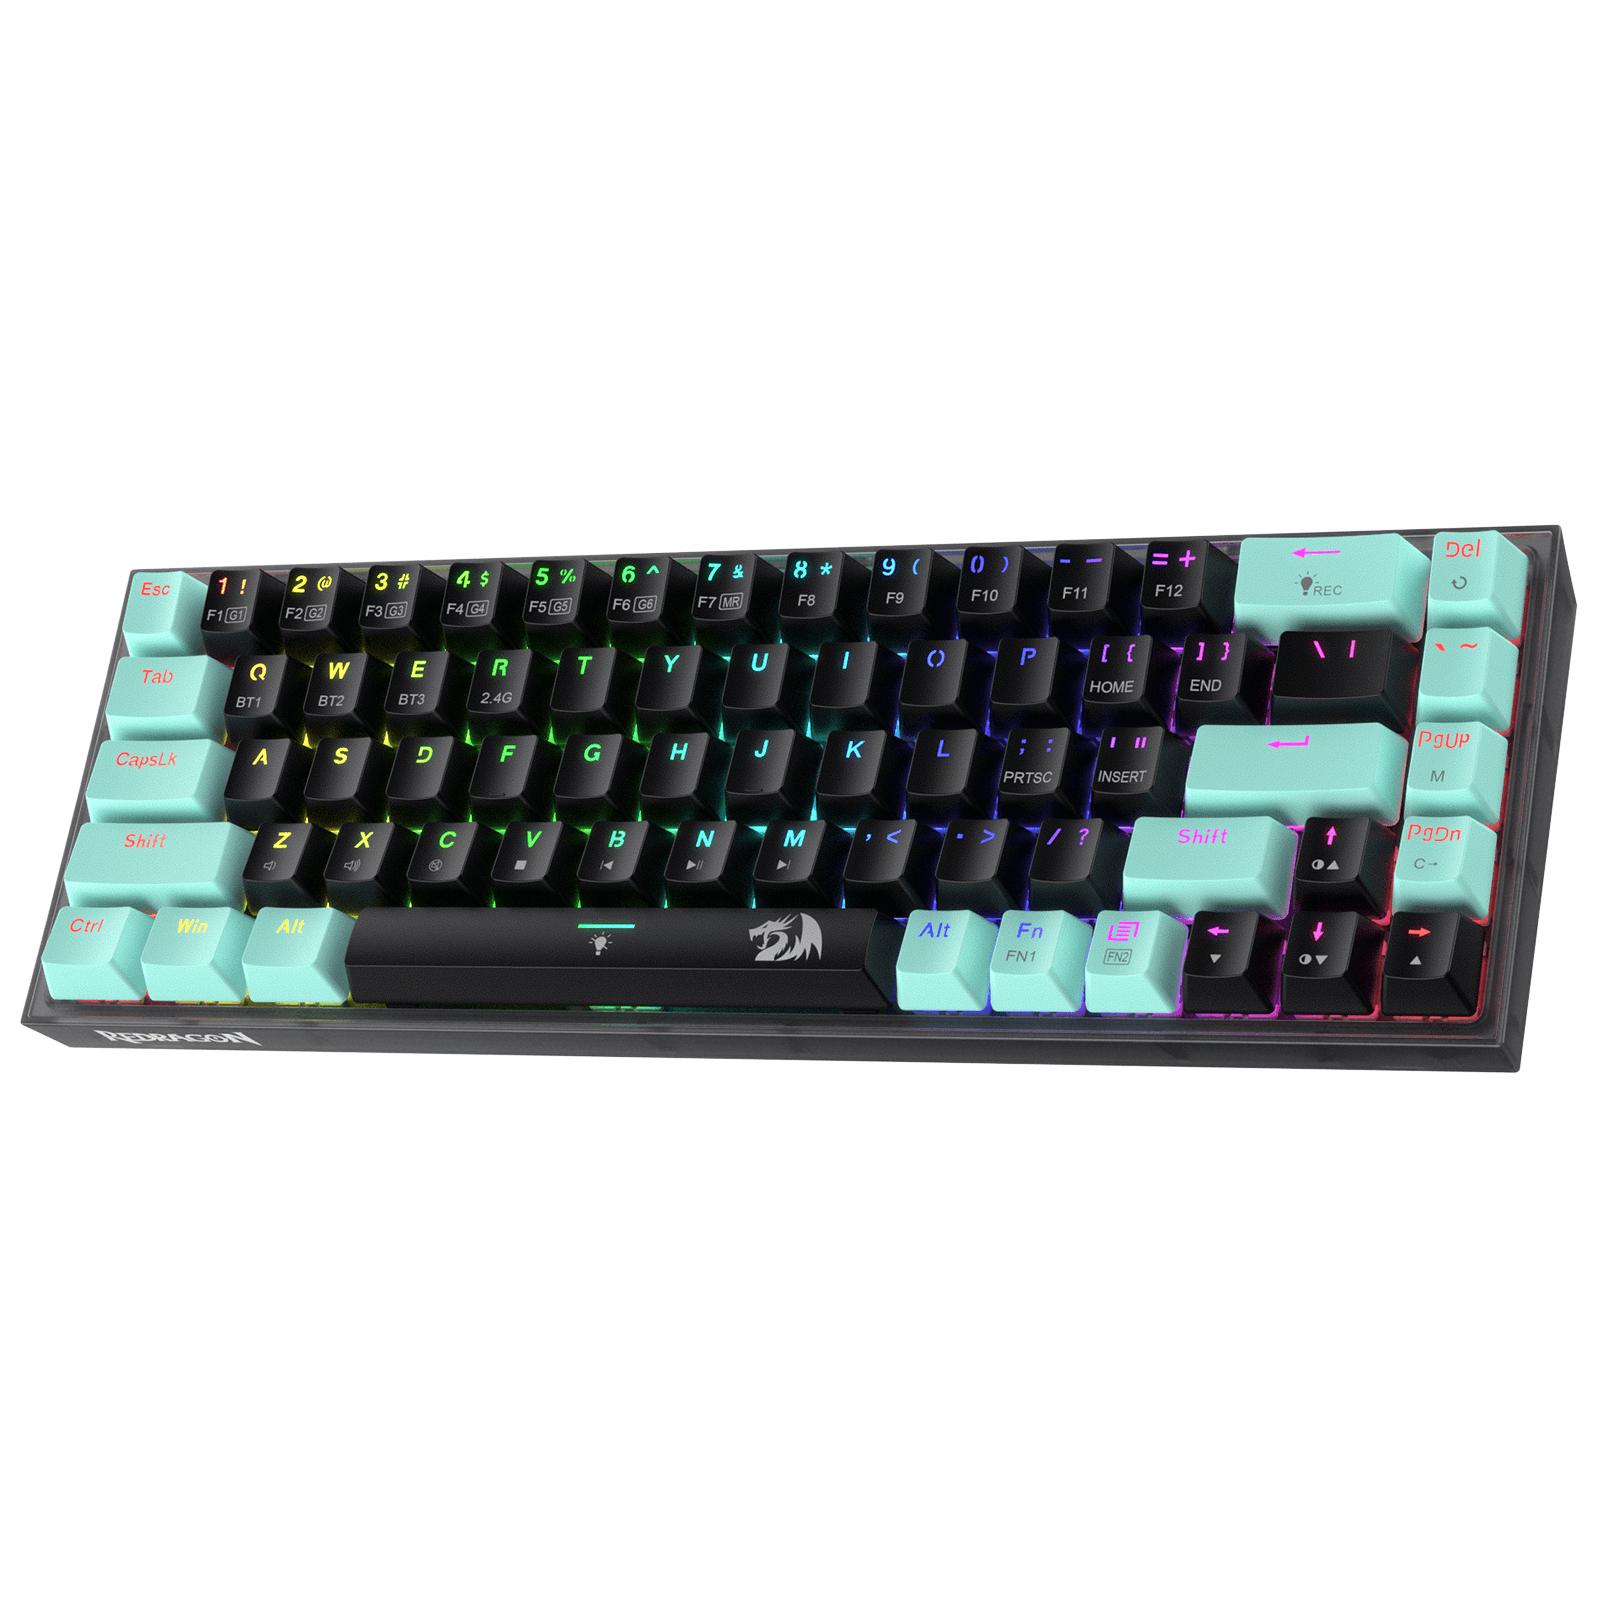 razer keyboard green